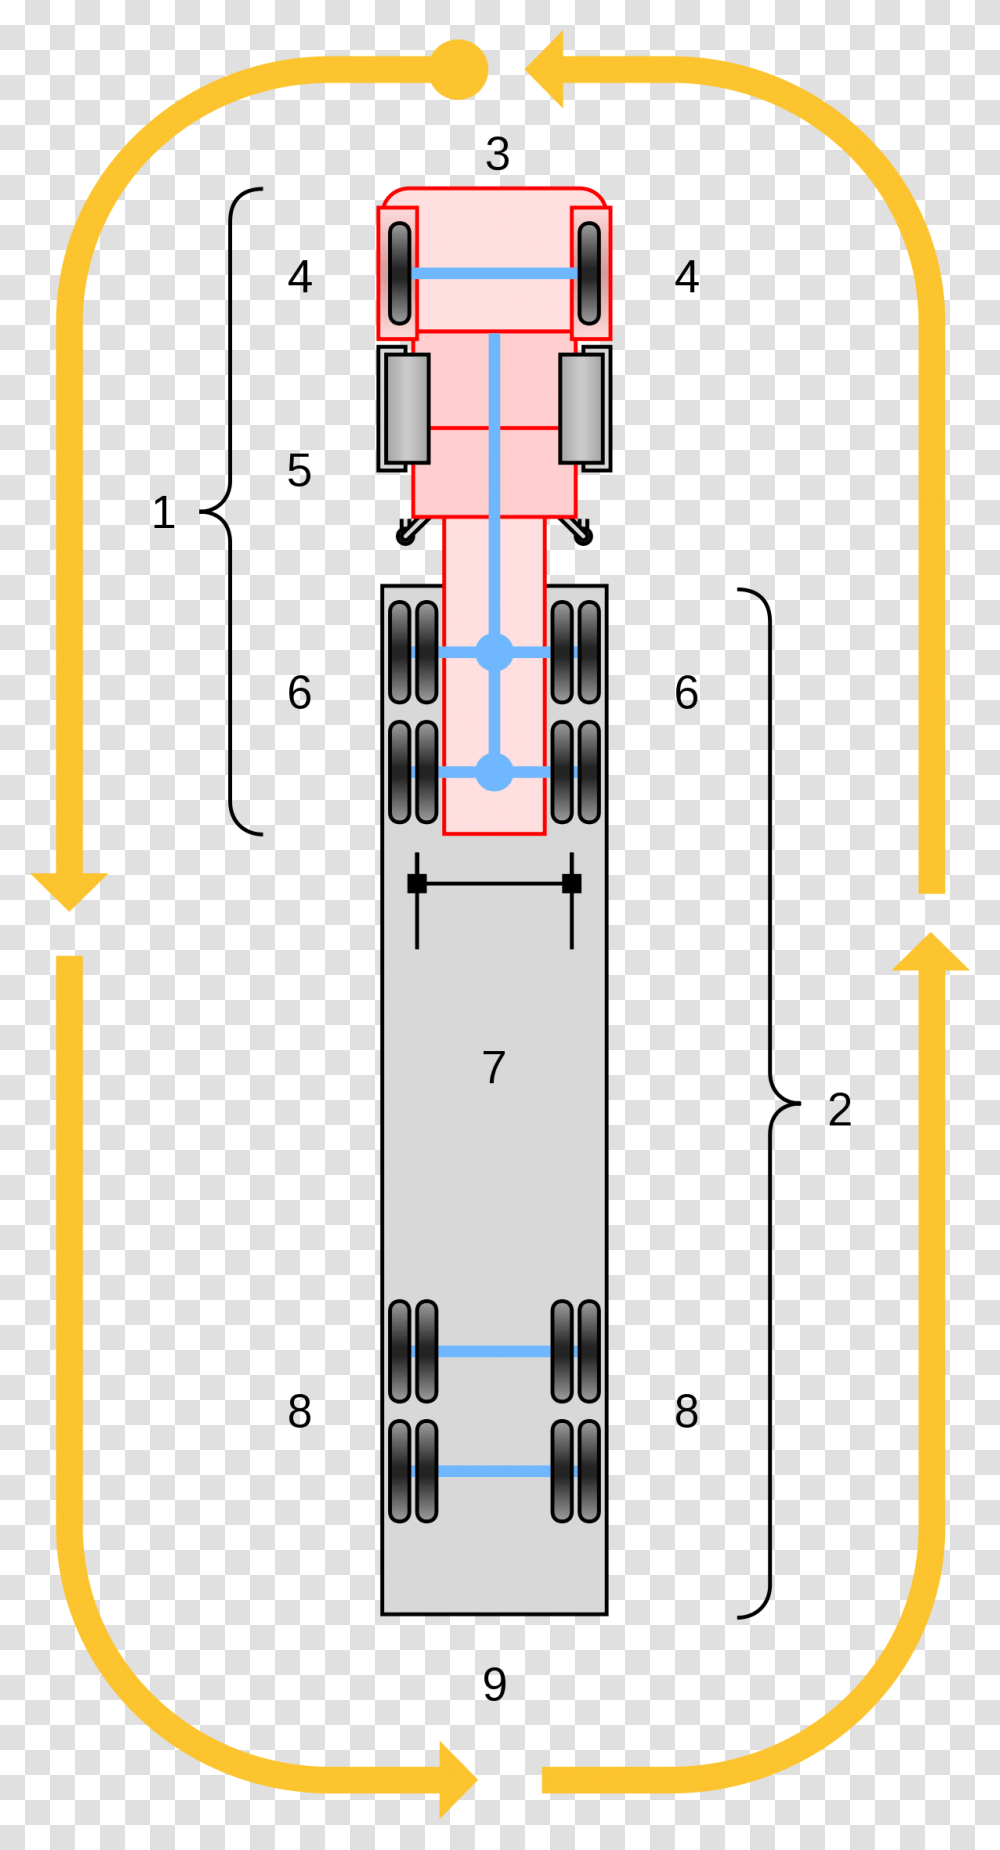 18 Wheeler Semi Truck Diagram, Tower, Architecture, Building, Gas Pump Transparent Png